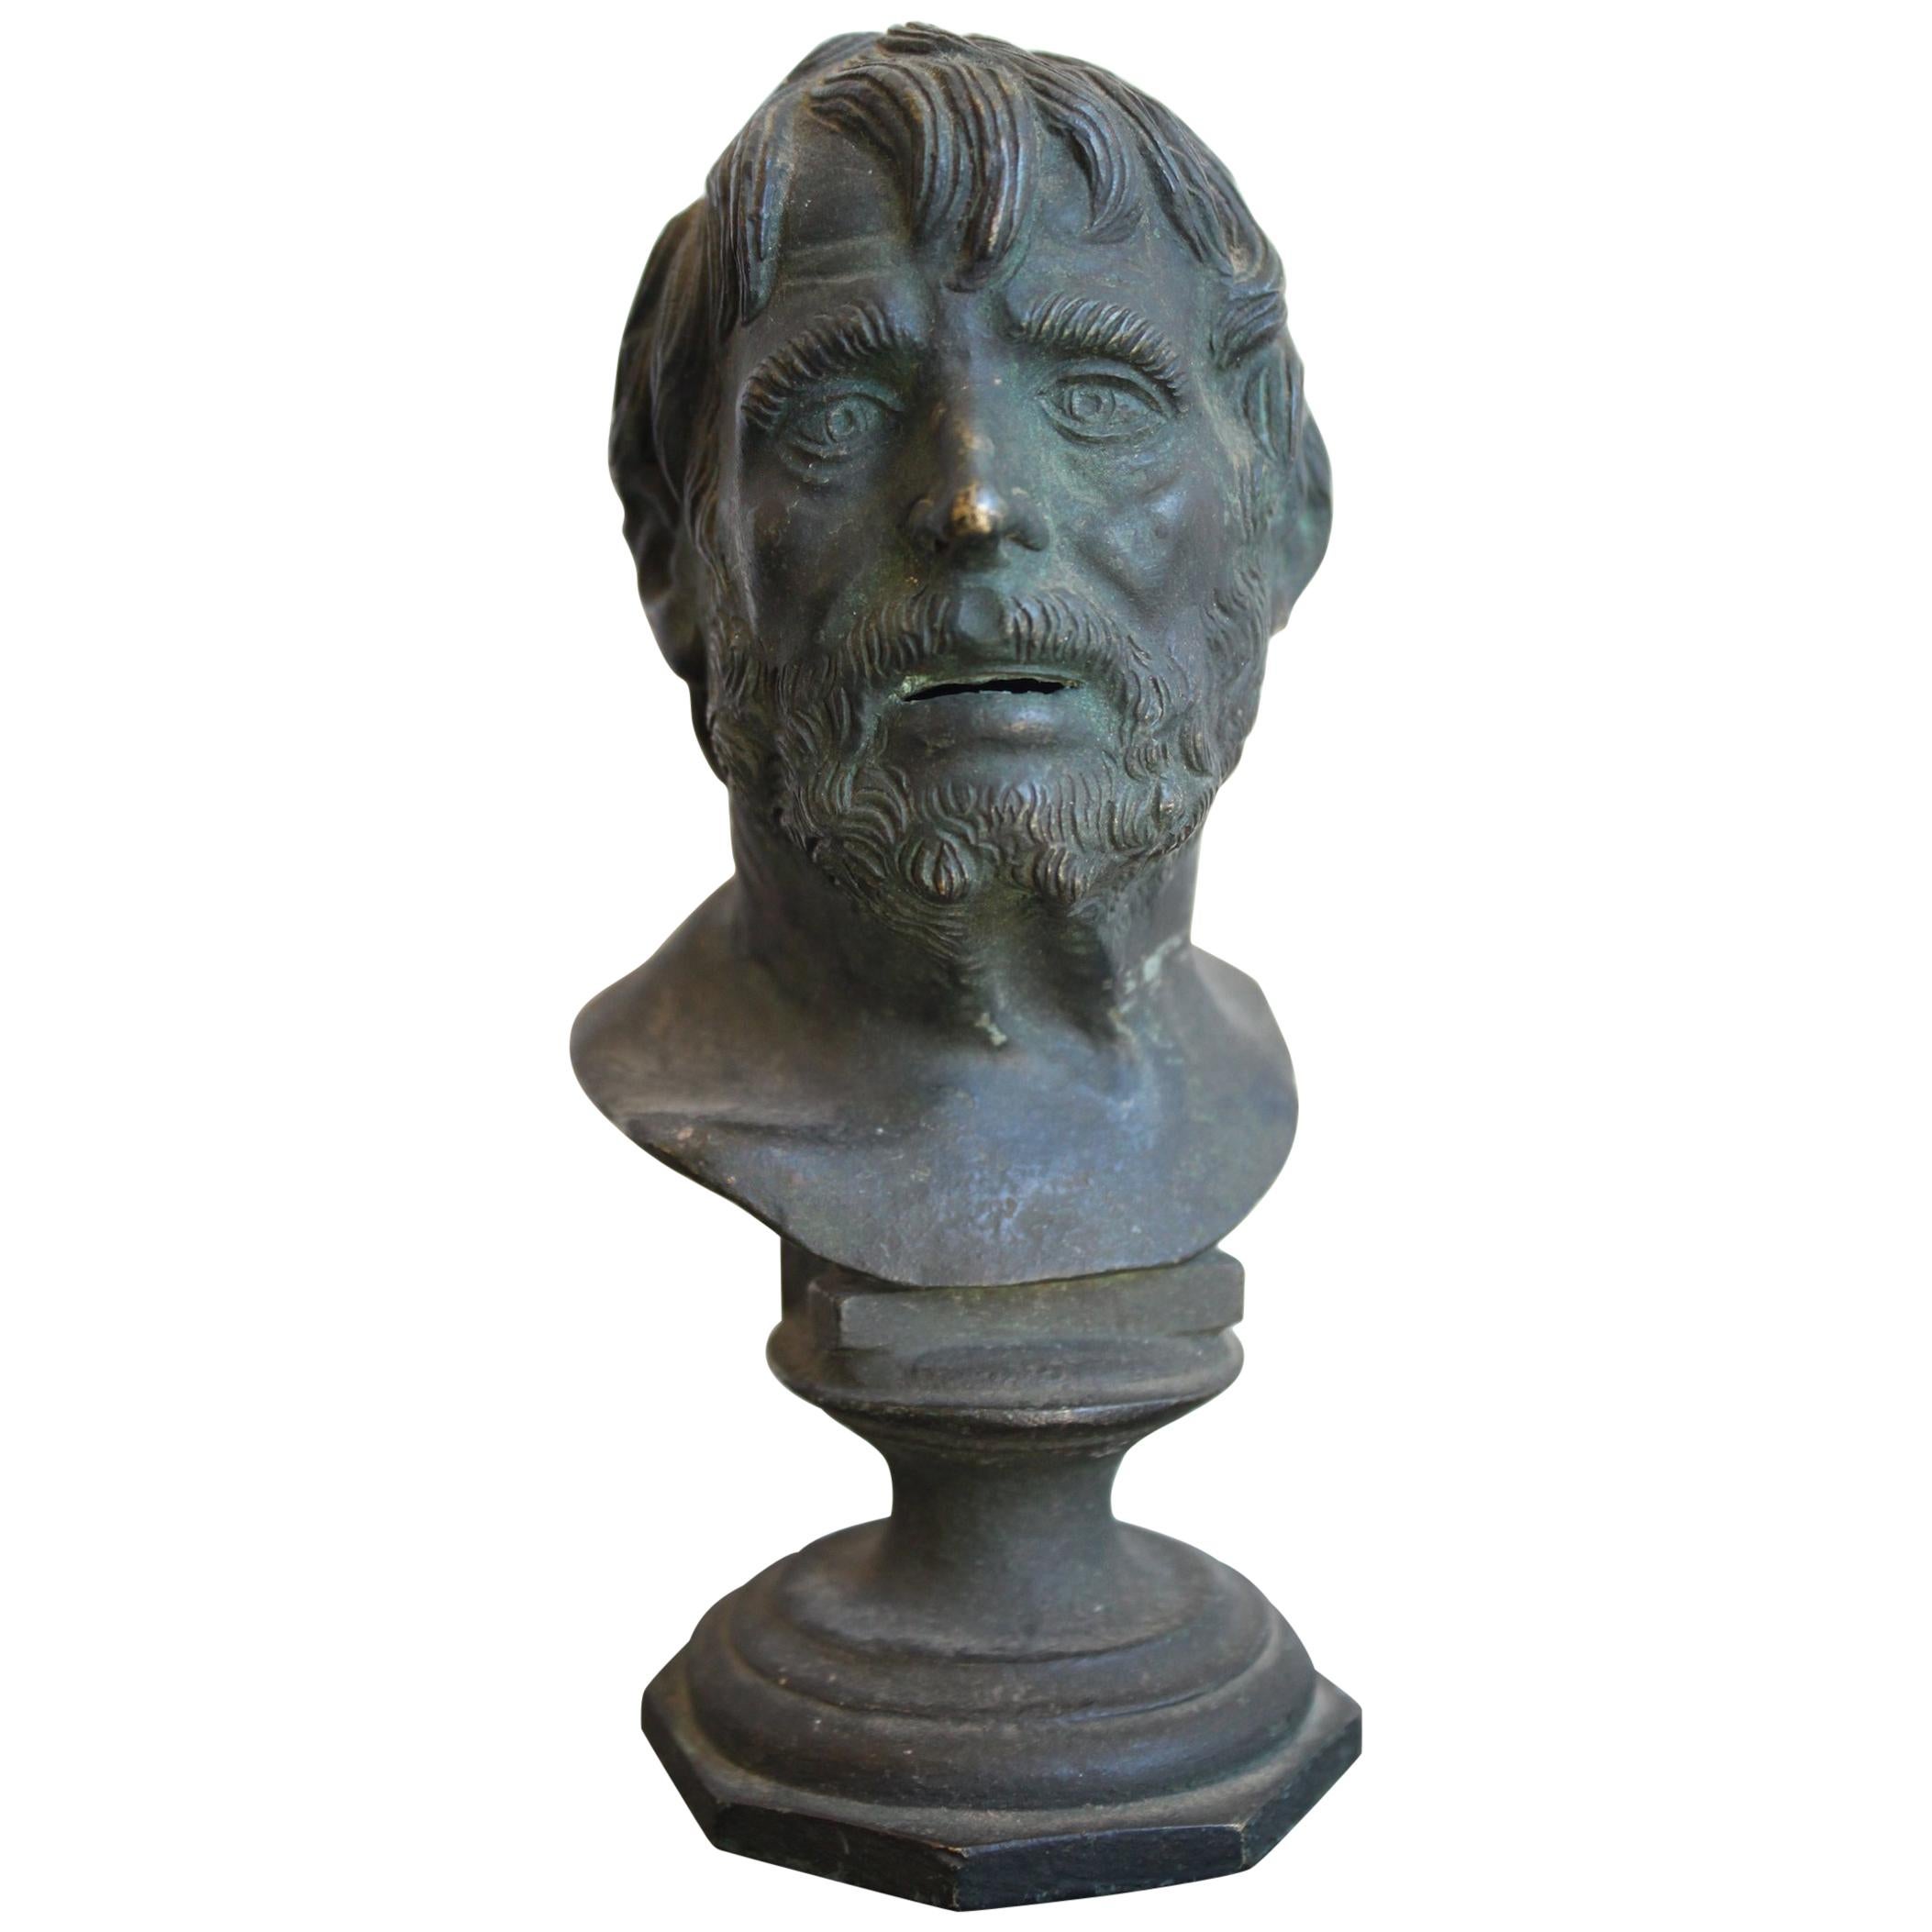 19th Century Bust of Seneca